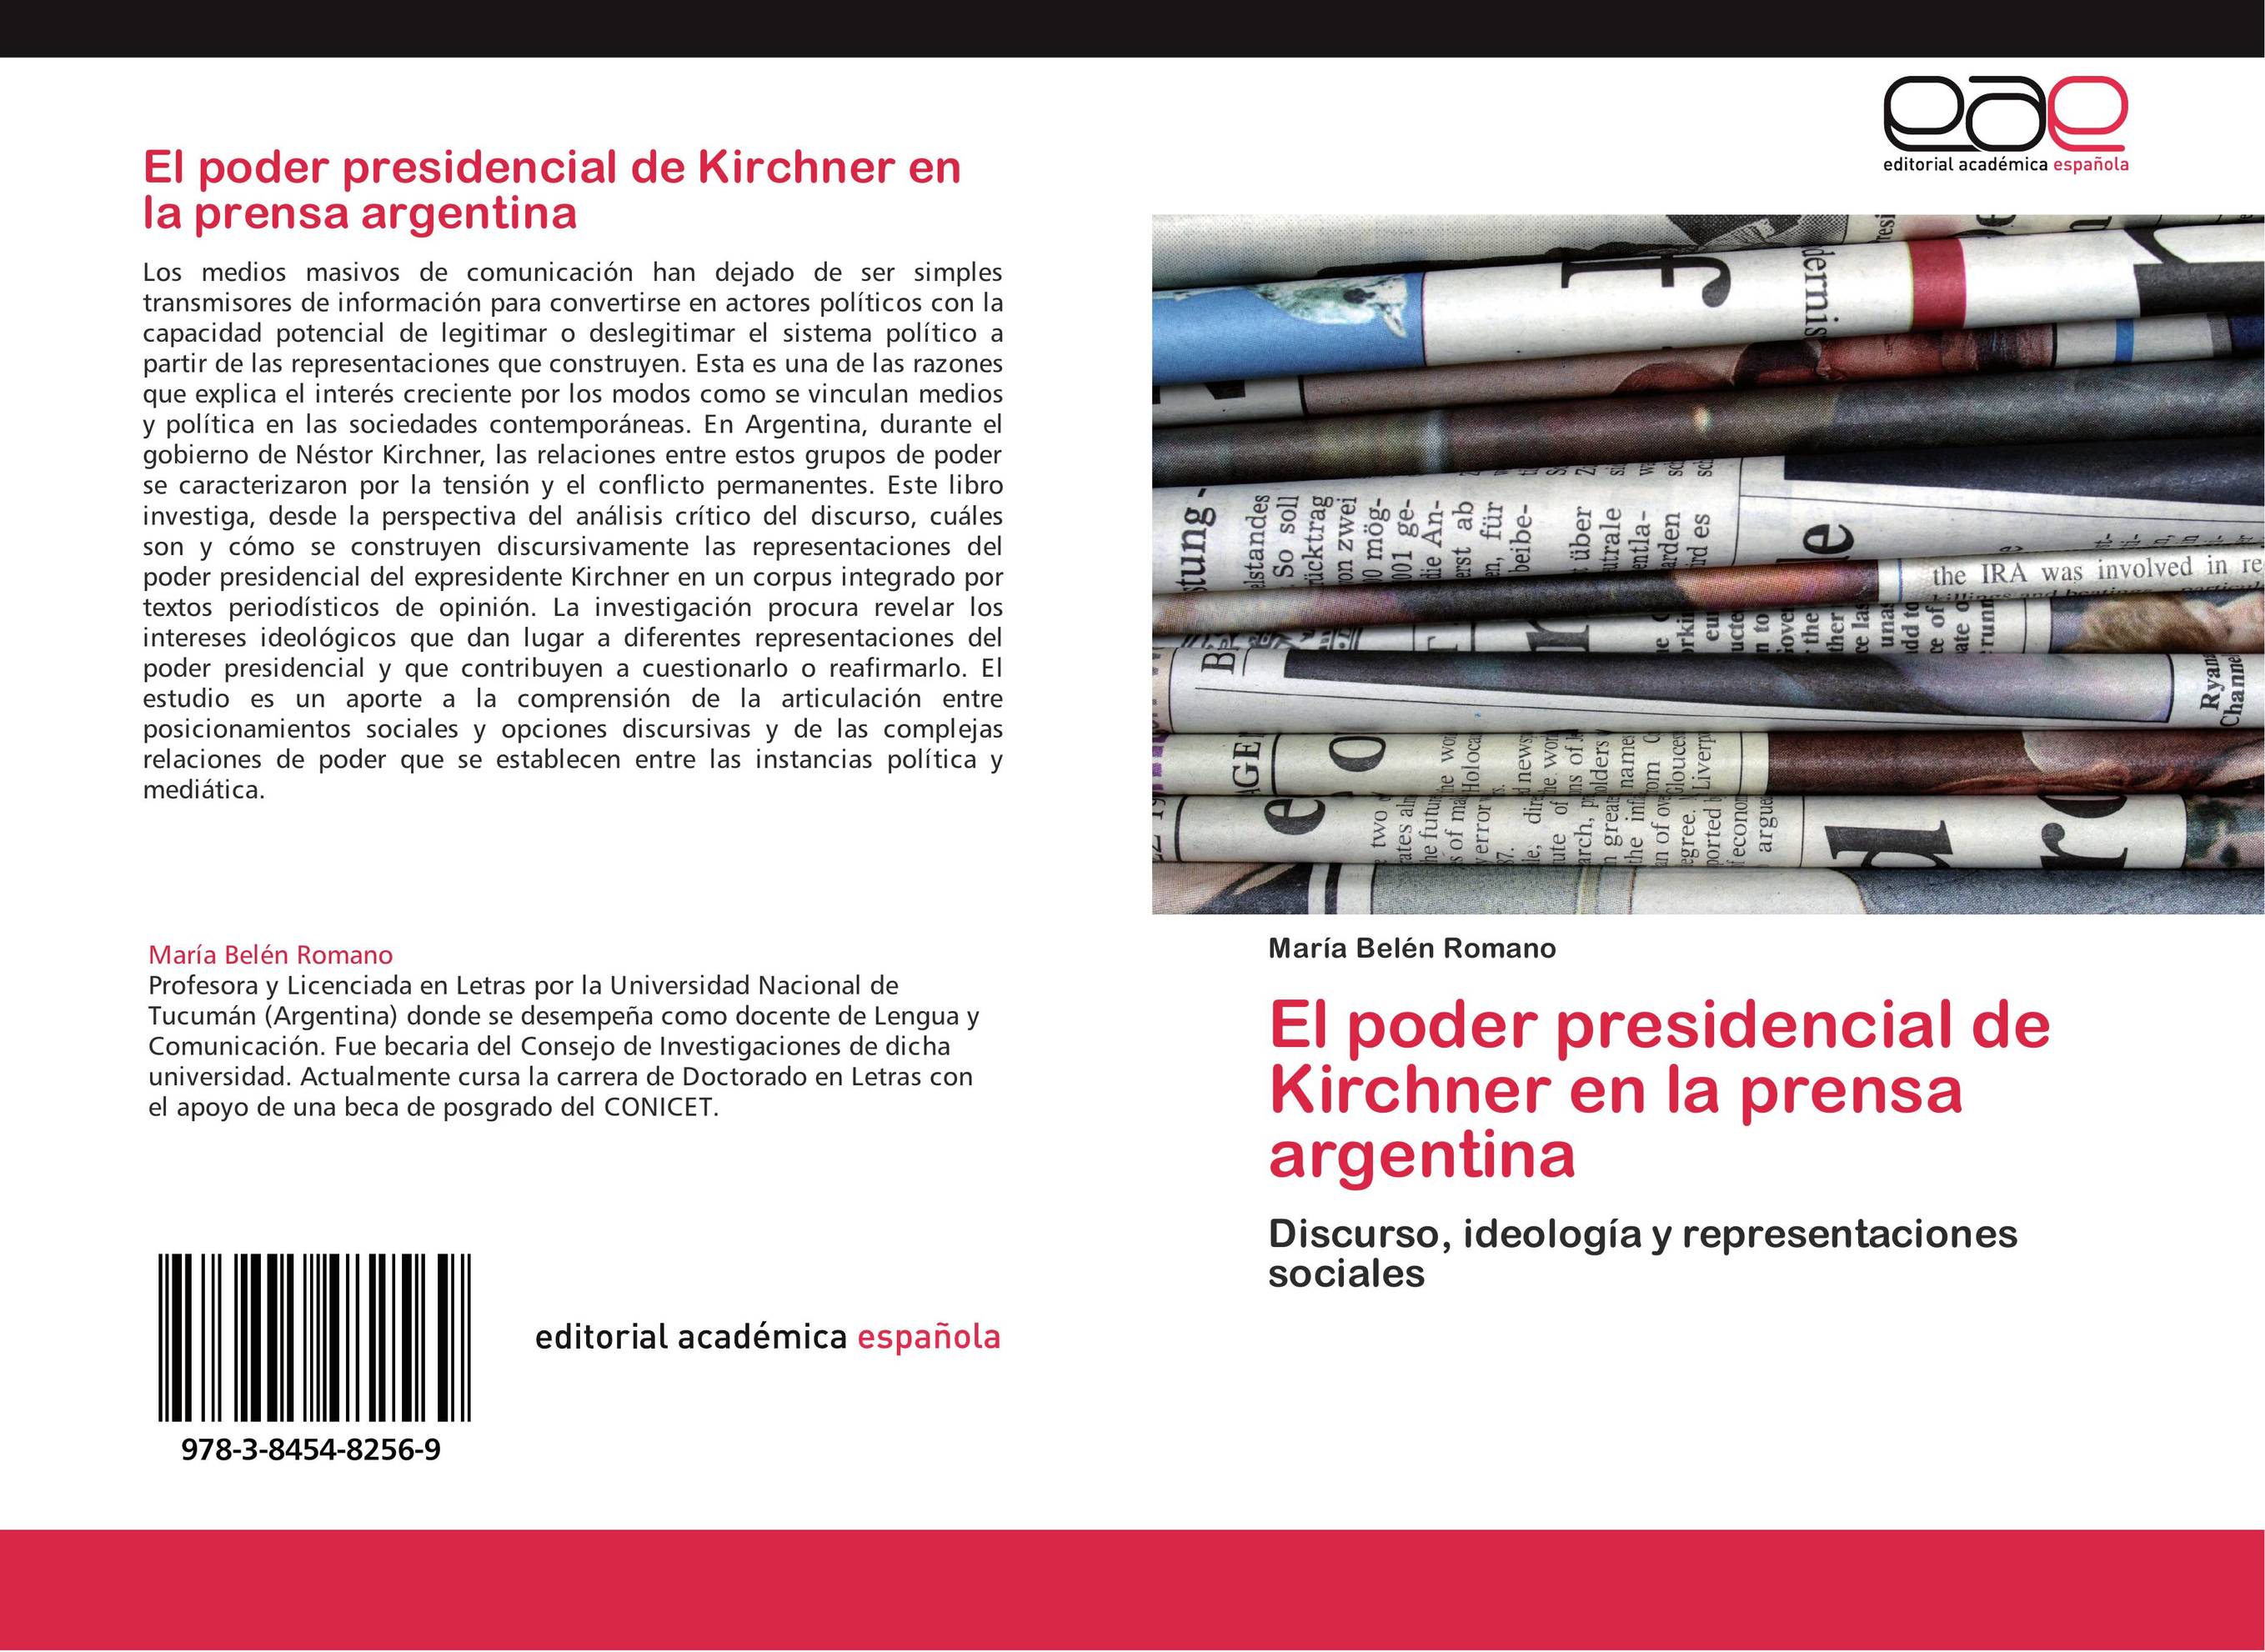 El poder presidencial de Kirchner en la prensa argentina